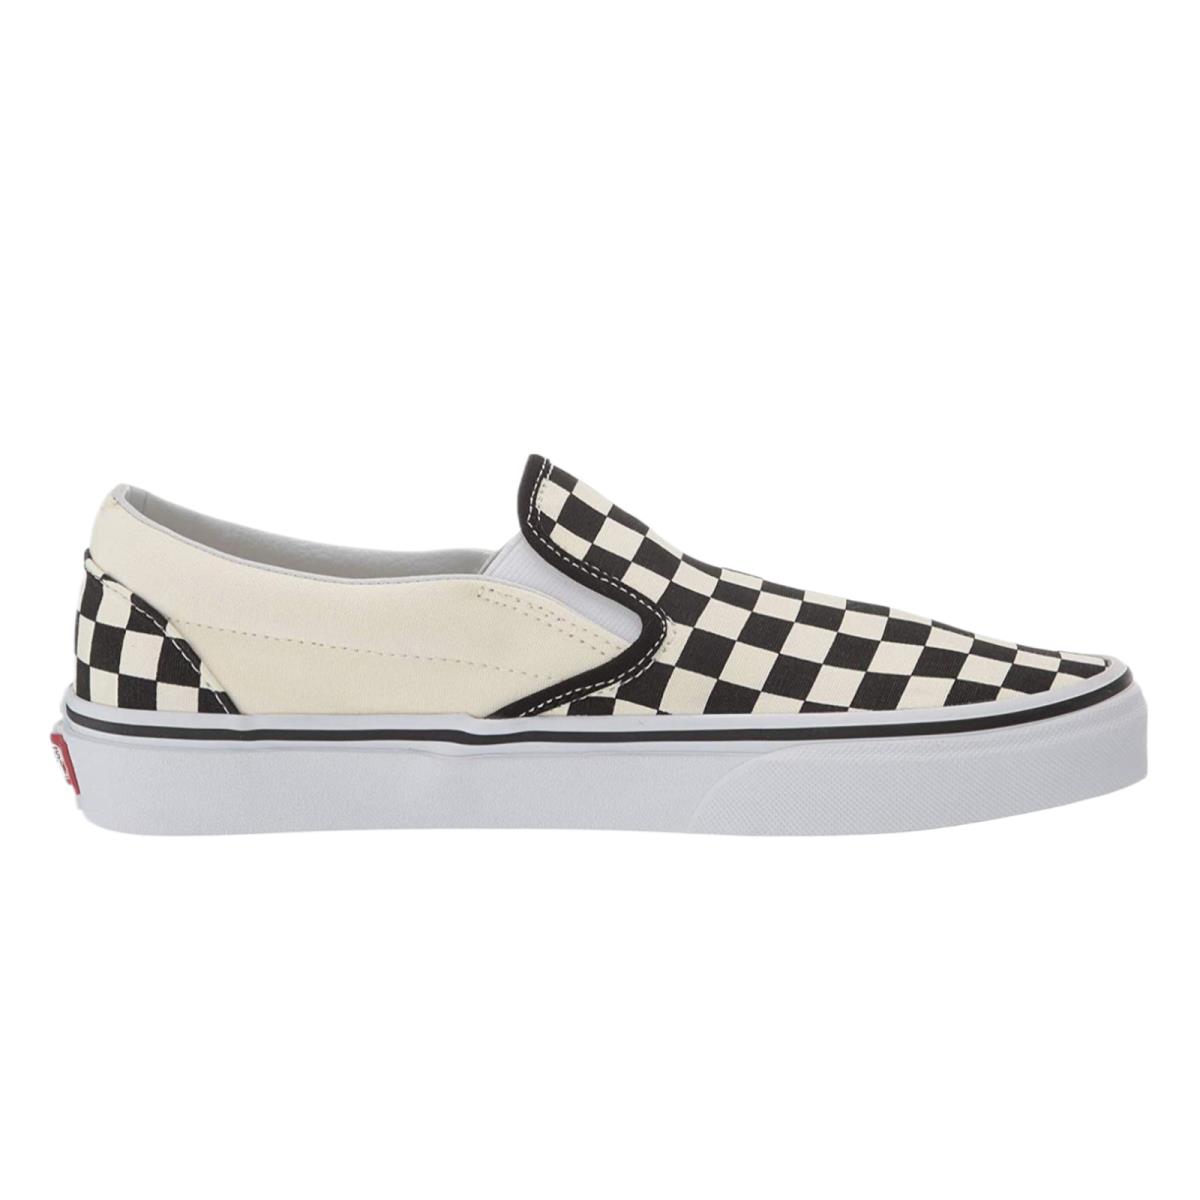 Vans Adult Unisex Checkerboard Slip-on Skate Shoes Black/off White VN000EYEBWW - Black/Off White Checkerboard